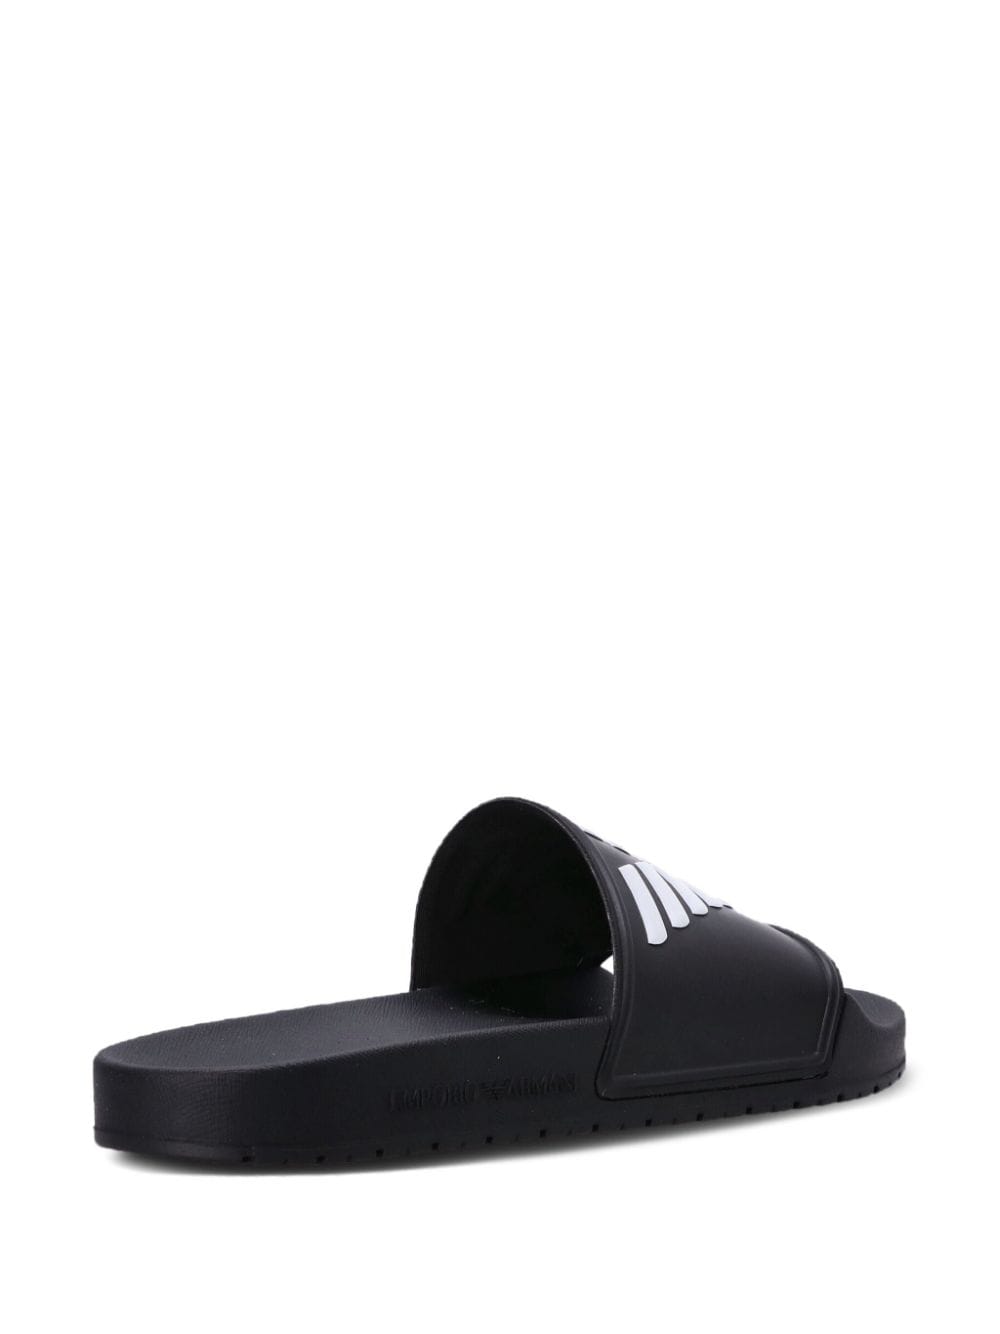 Emporio Armani Sandals Black